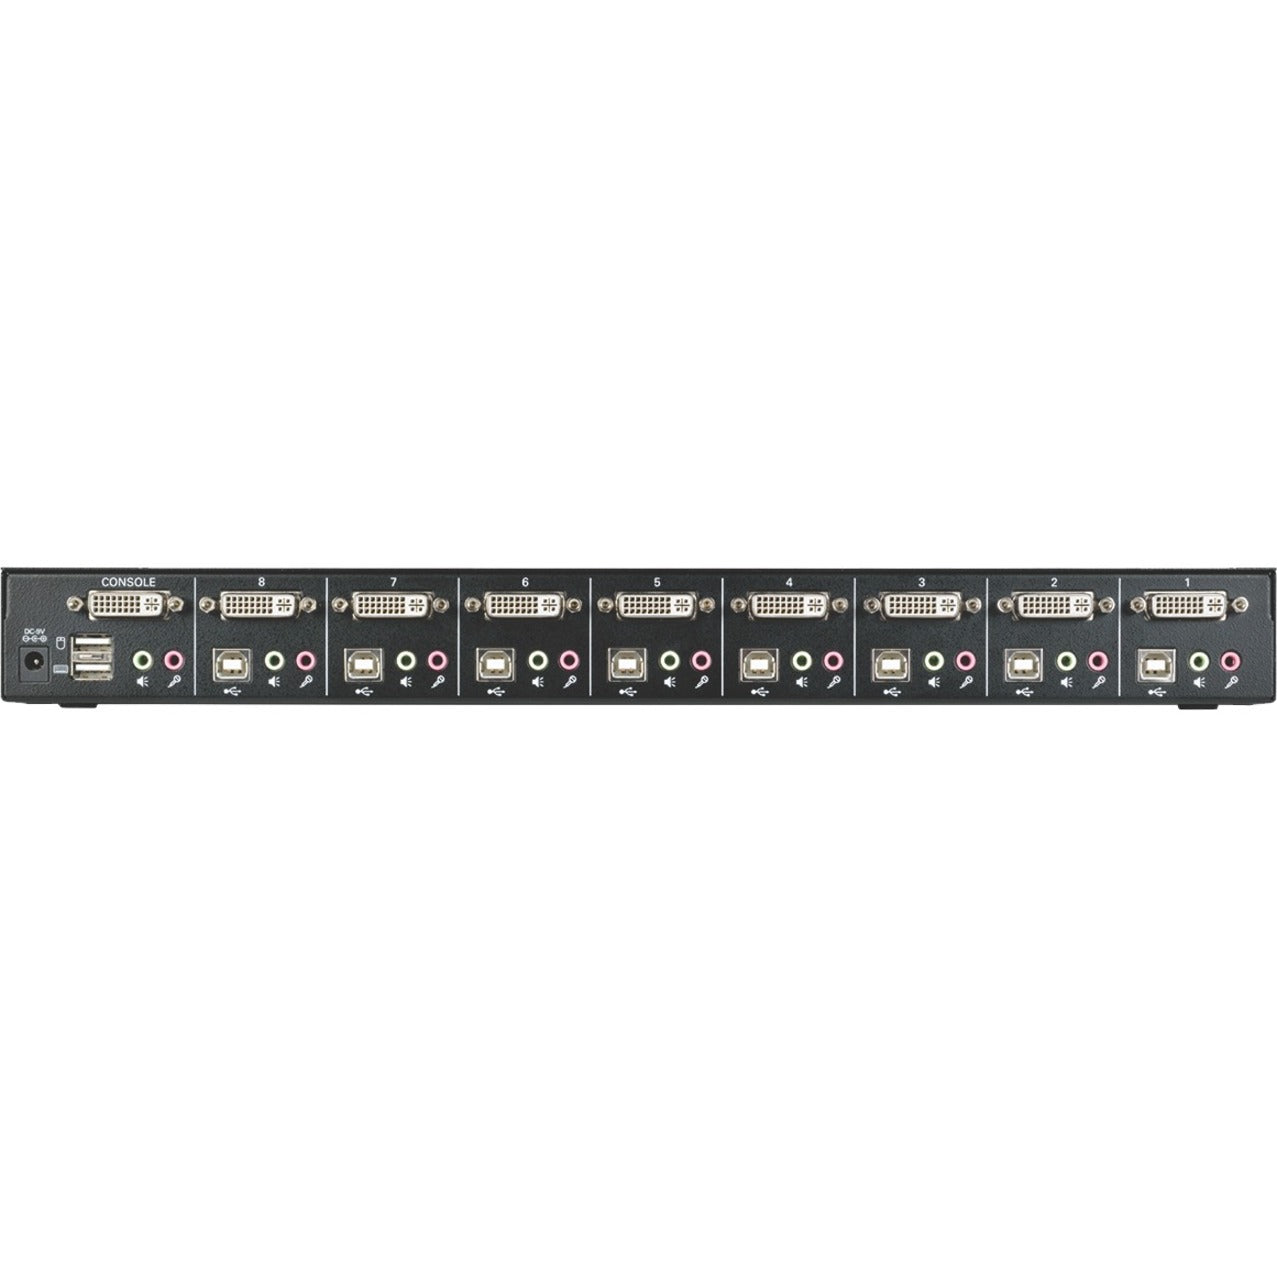 Tripp Lite B043-DUA8-SL NetController 8-Port 1U Rackmount DVI / USB KVM Switch with Audio and 2-Port USB Hub